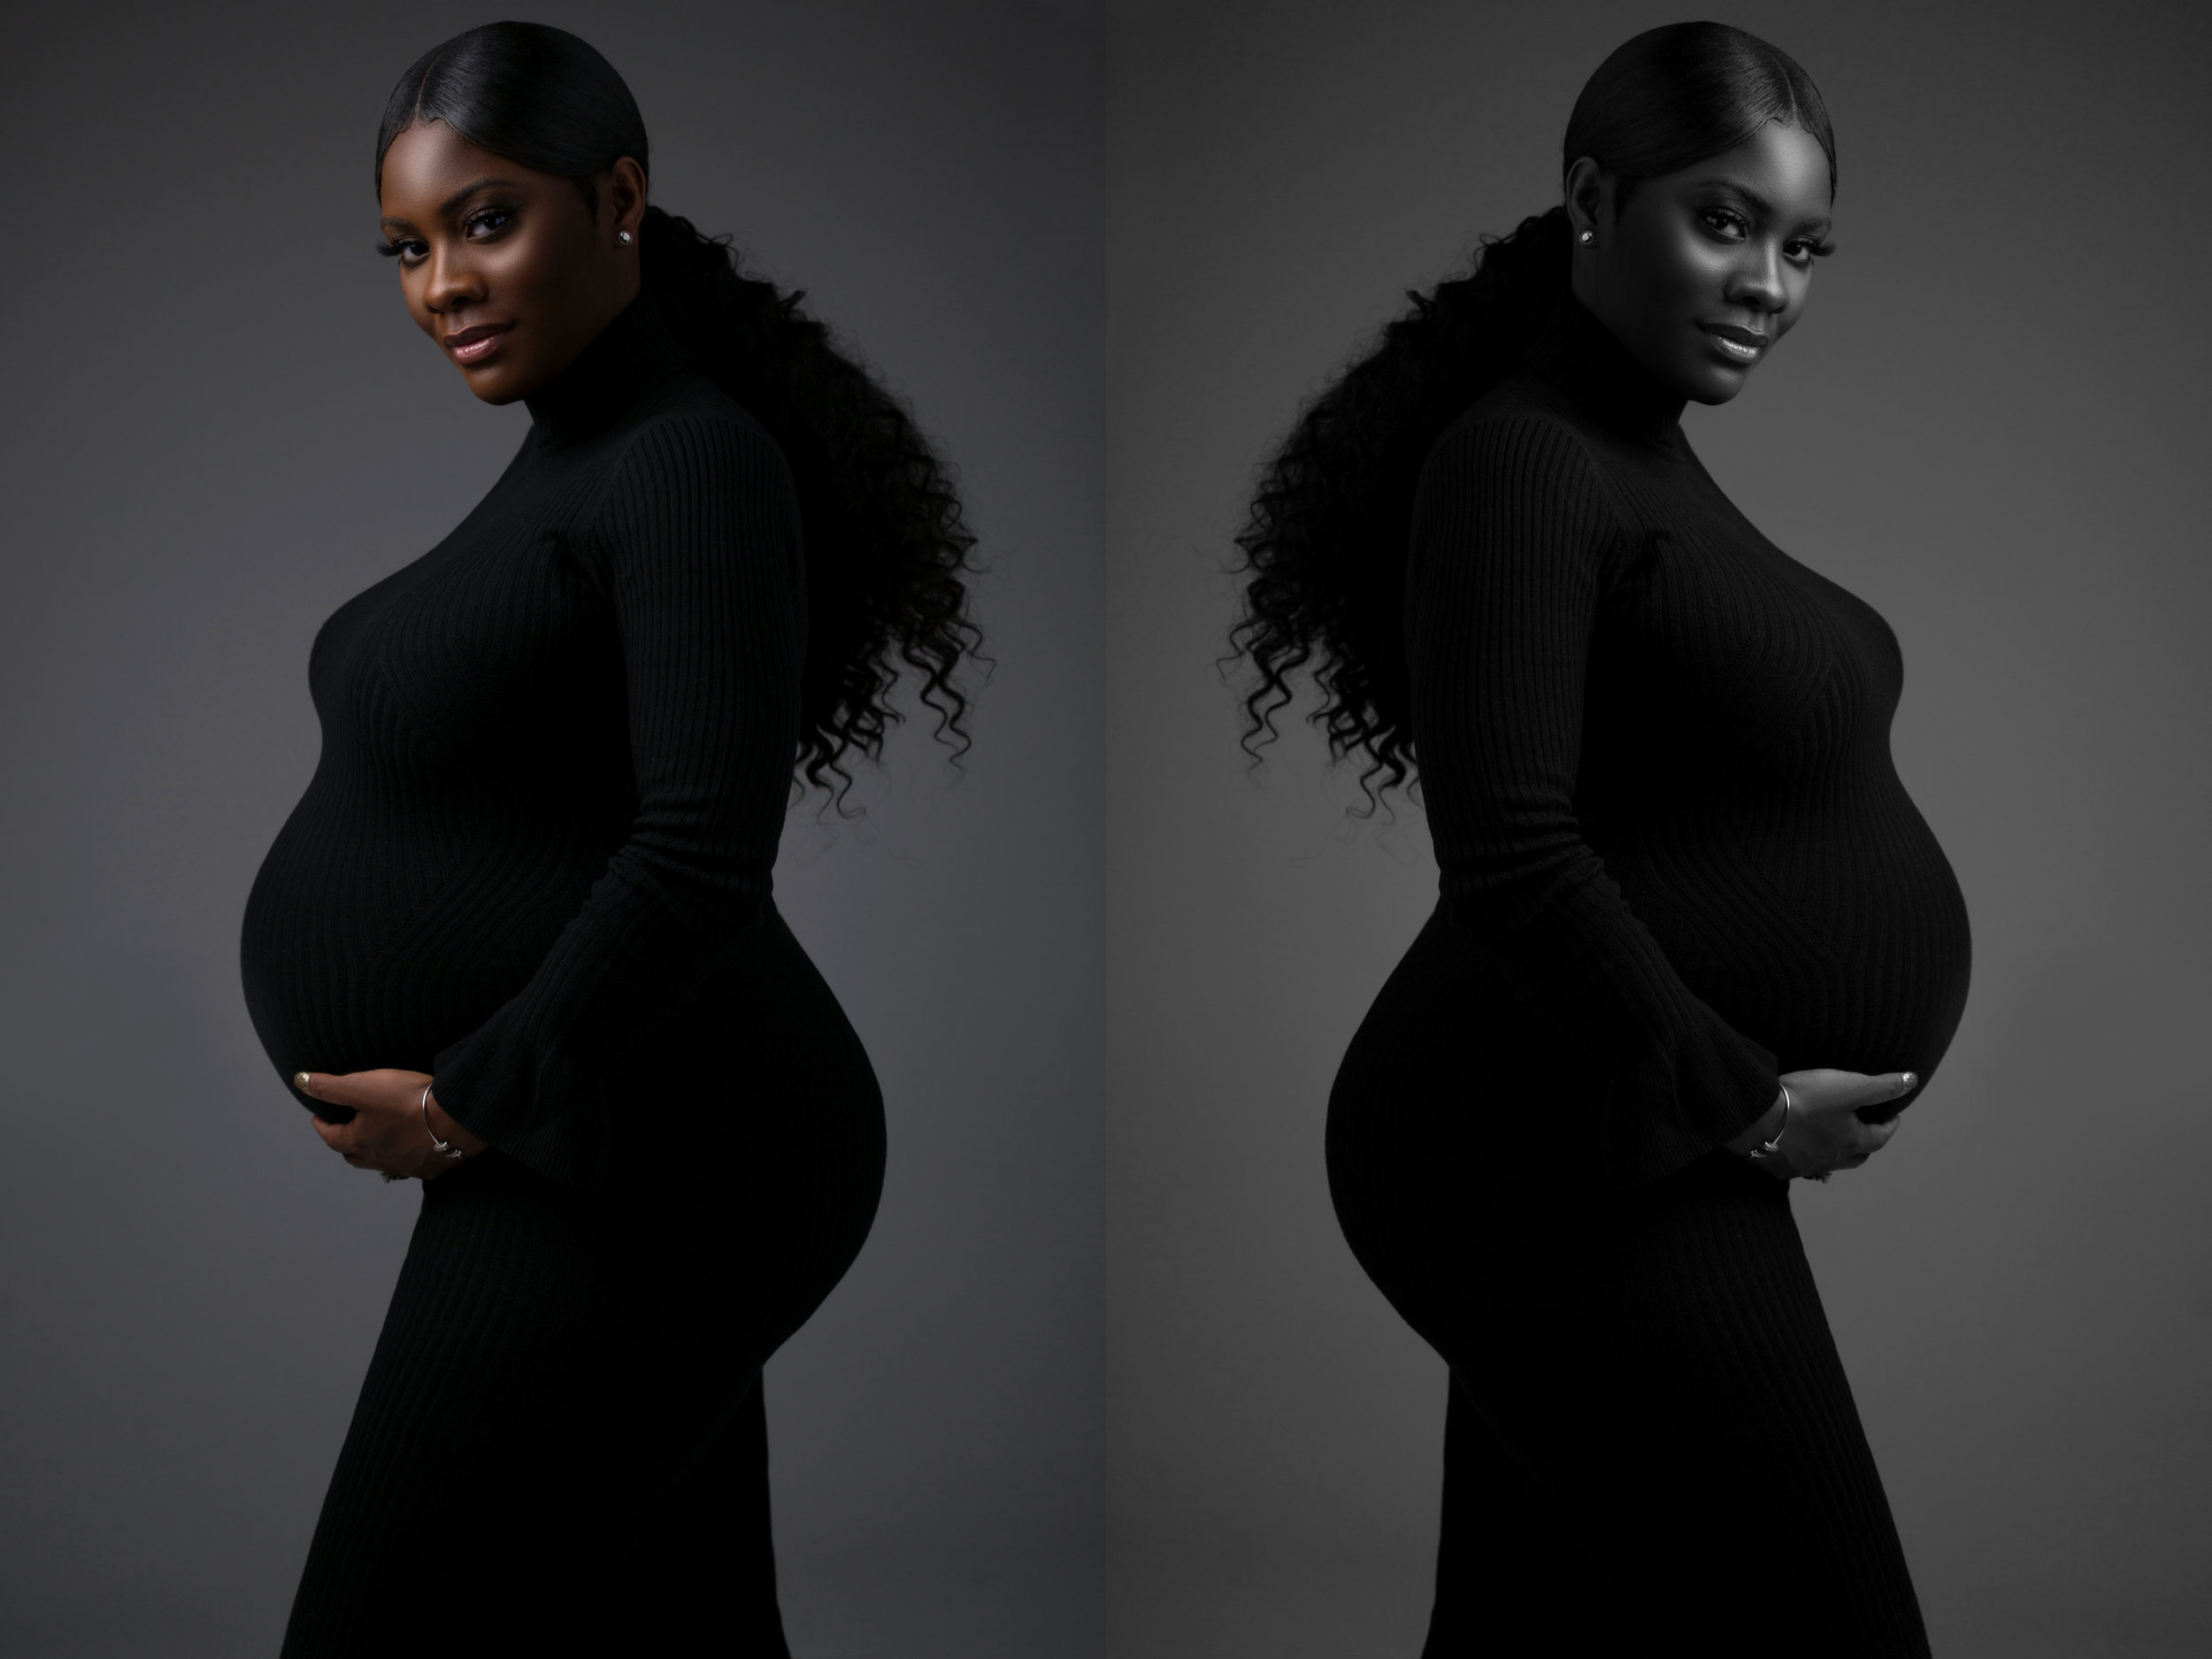 Strong maternity women attitude photoshoot